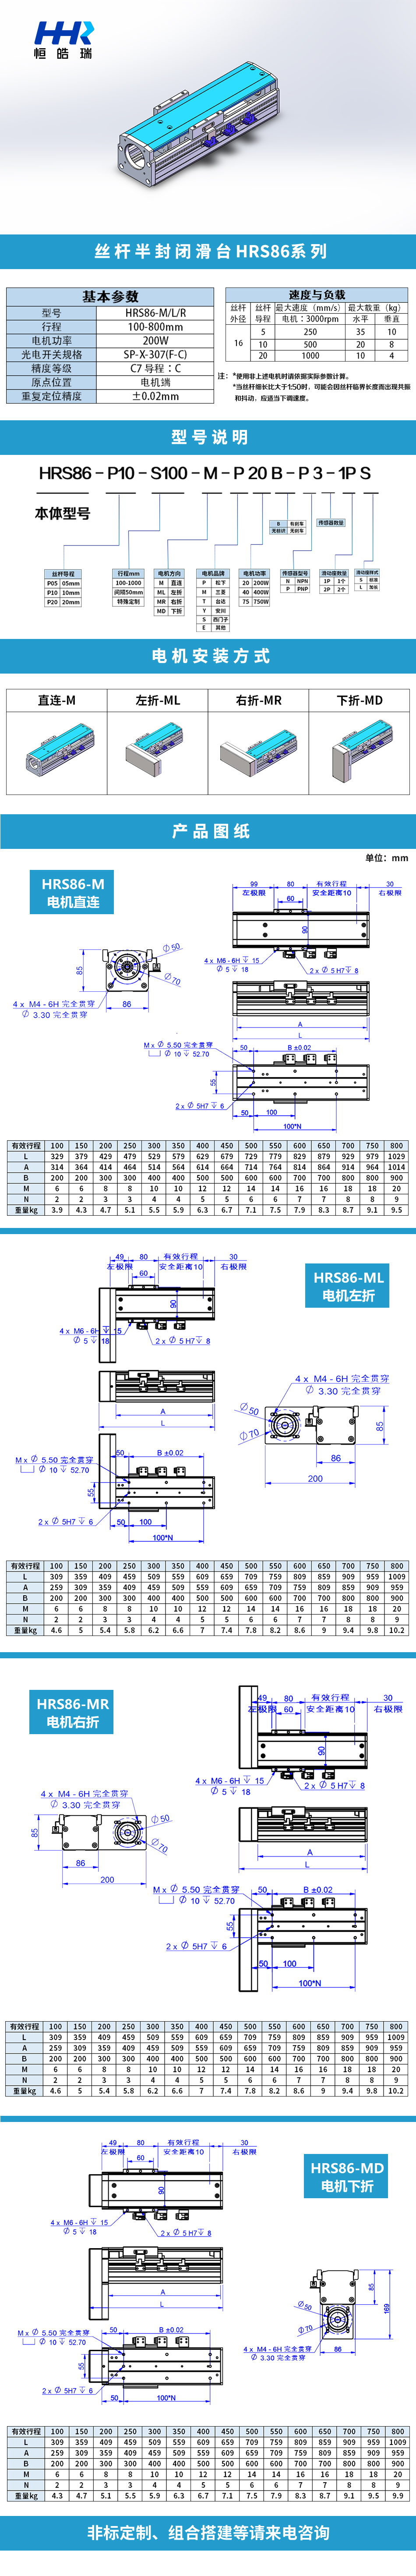 HRS86系列.jpg